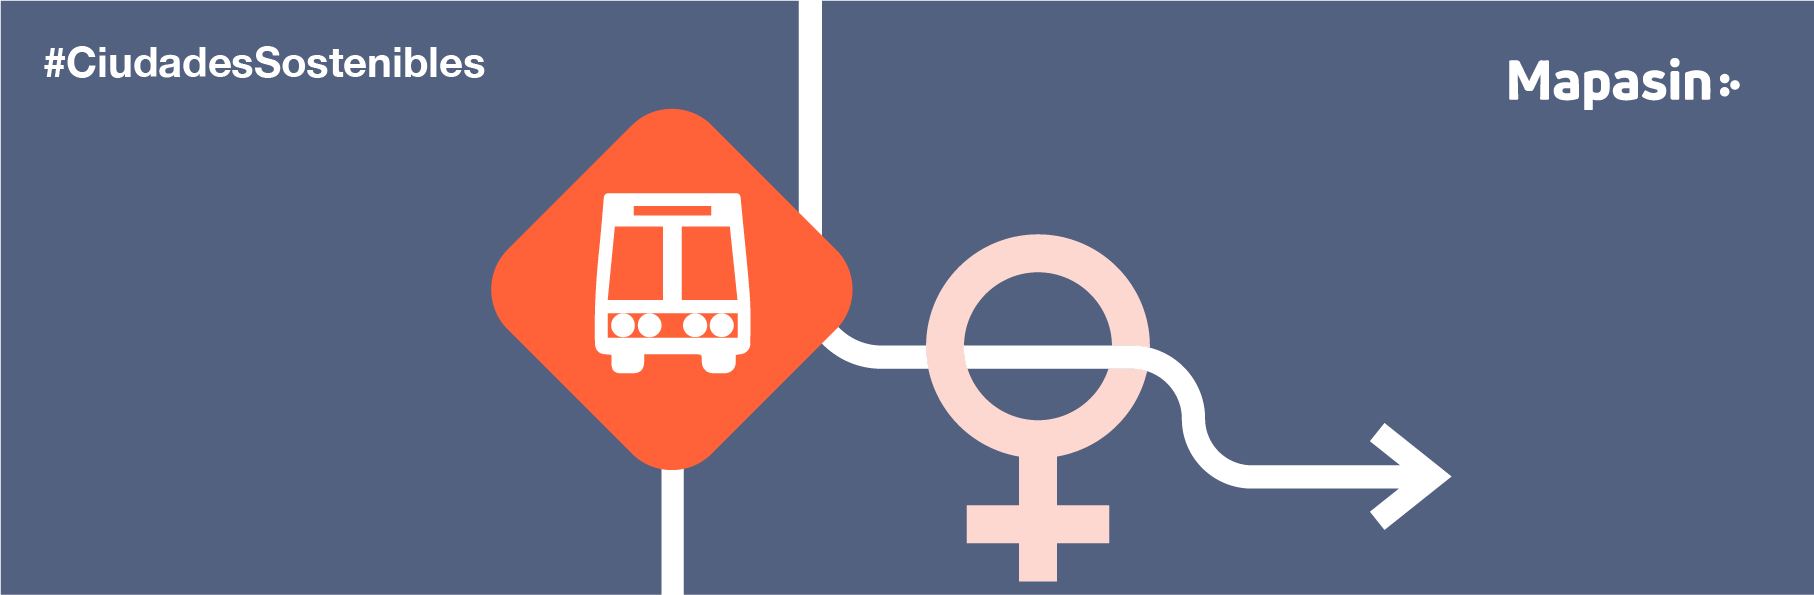 Mujeres transporte público